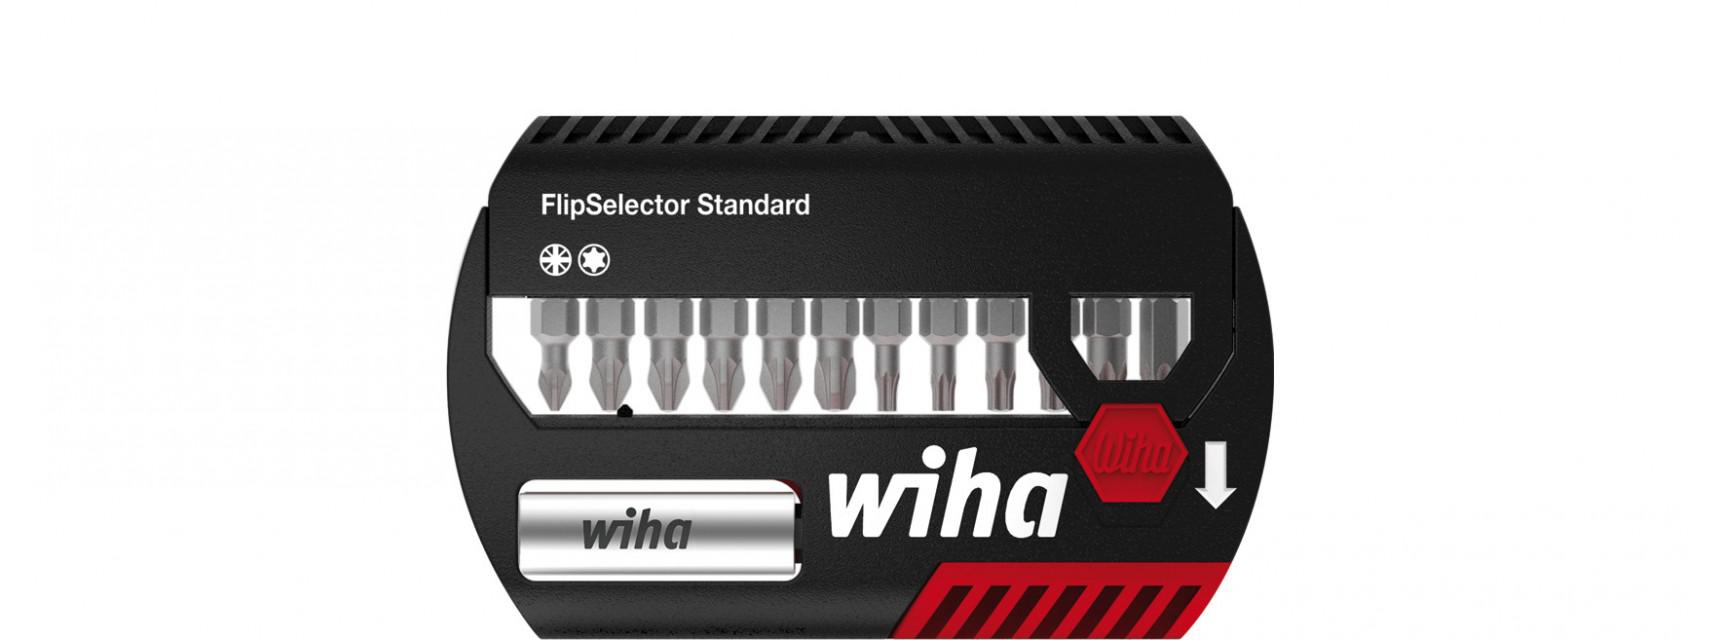 Набор бит FlipSelector Standard 25 мм SB 7947-905 WIHA 39061